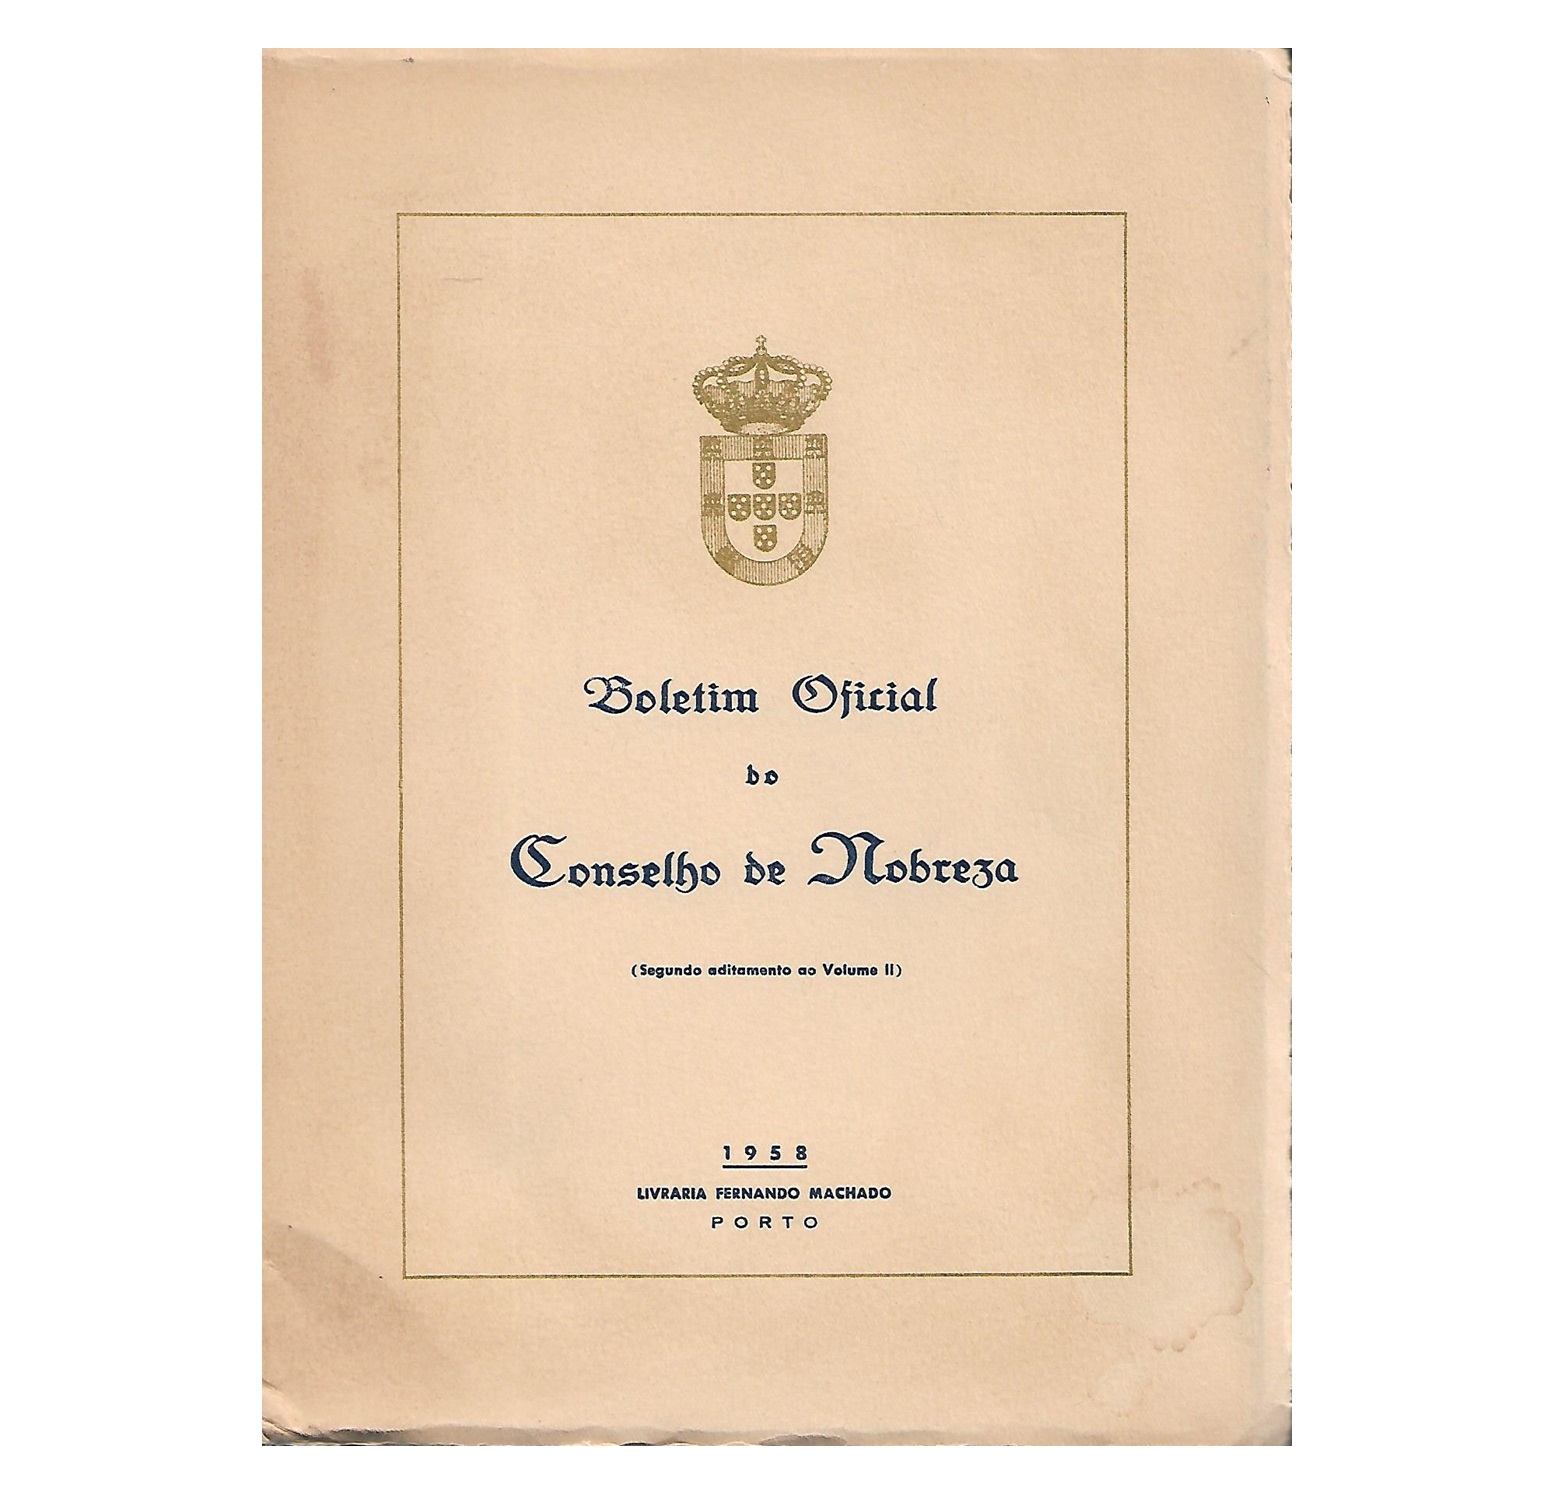 BOLETIM OFICIAL DO CONSELHO DA NOBREZA. 1958